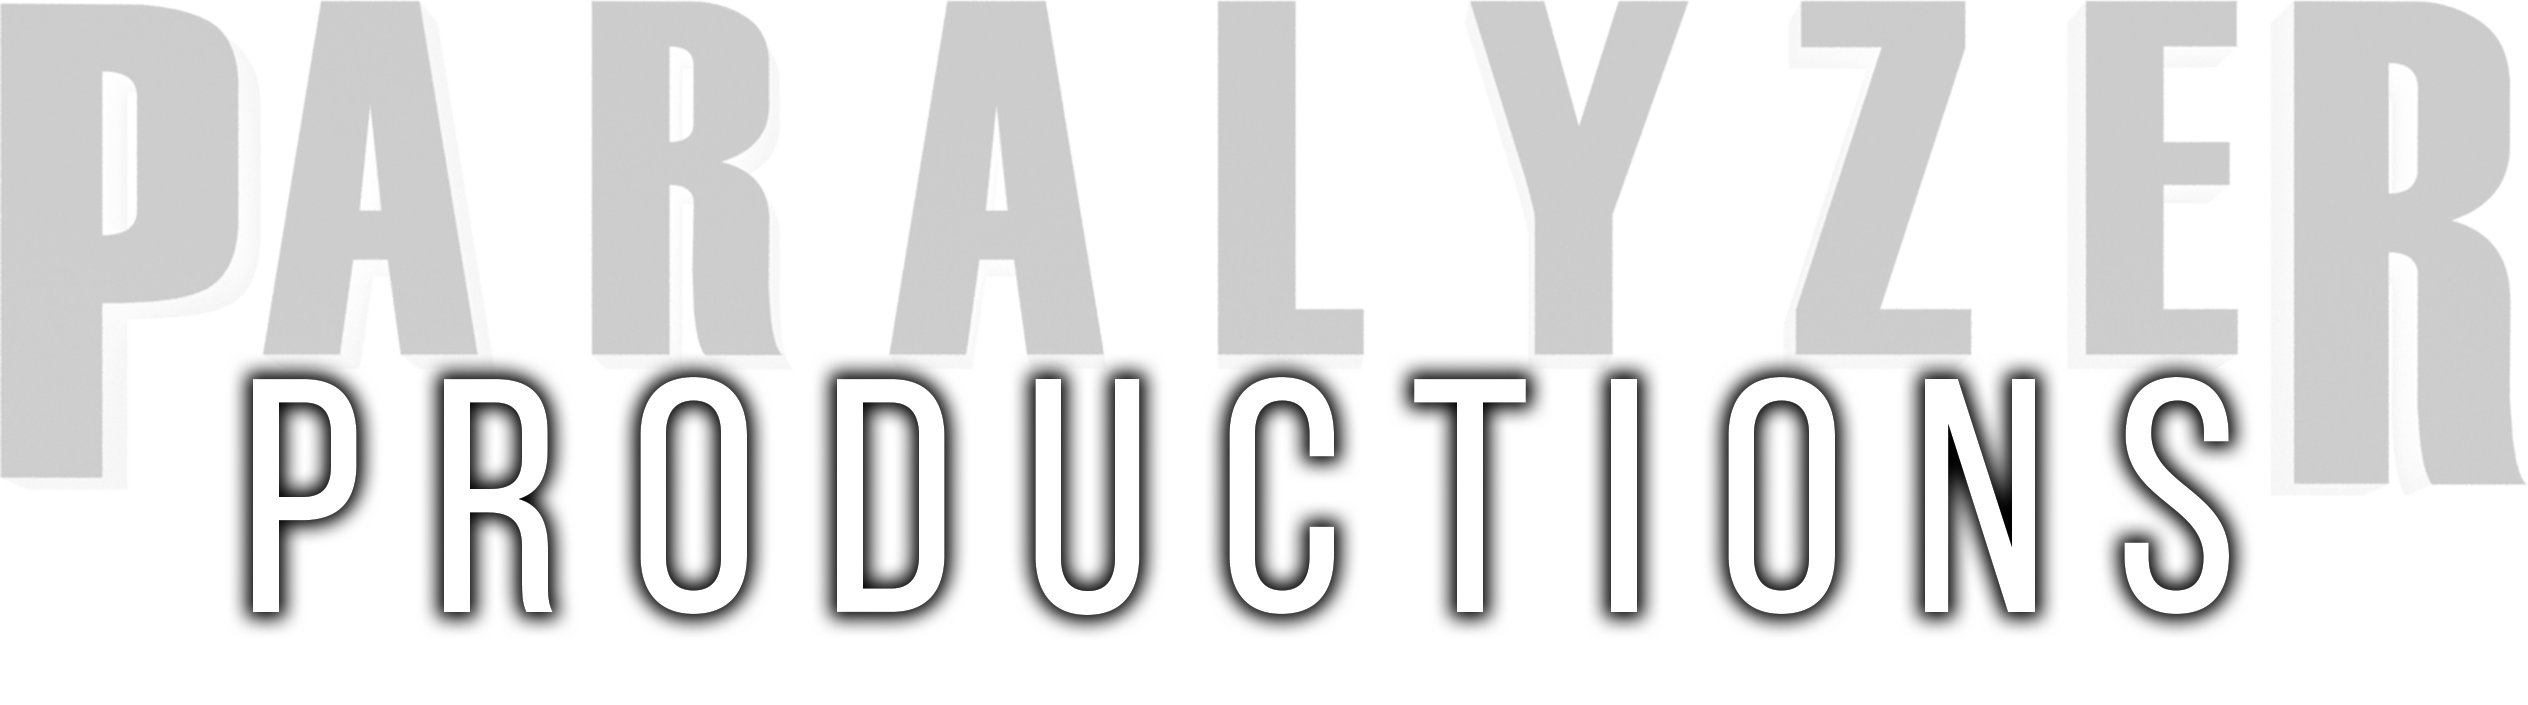 Paralyzer Productions